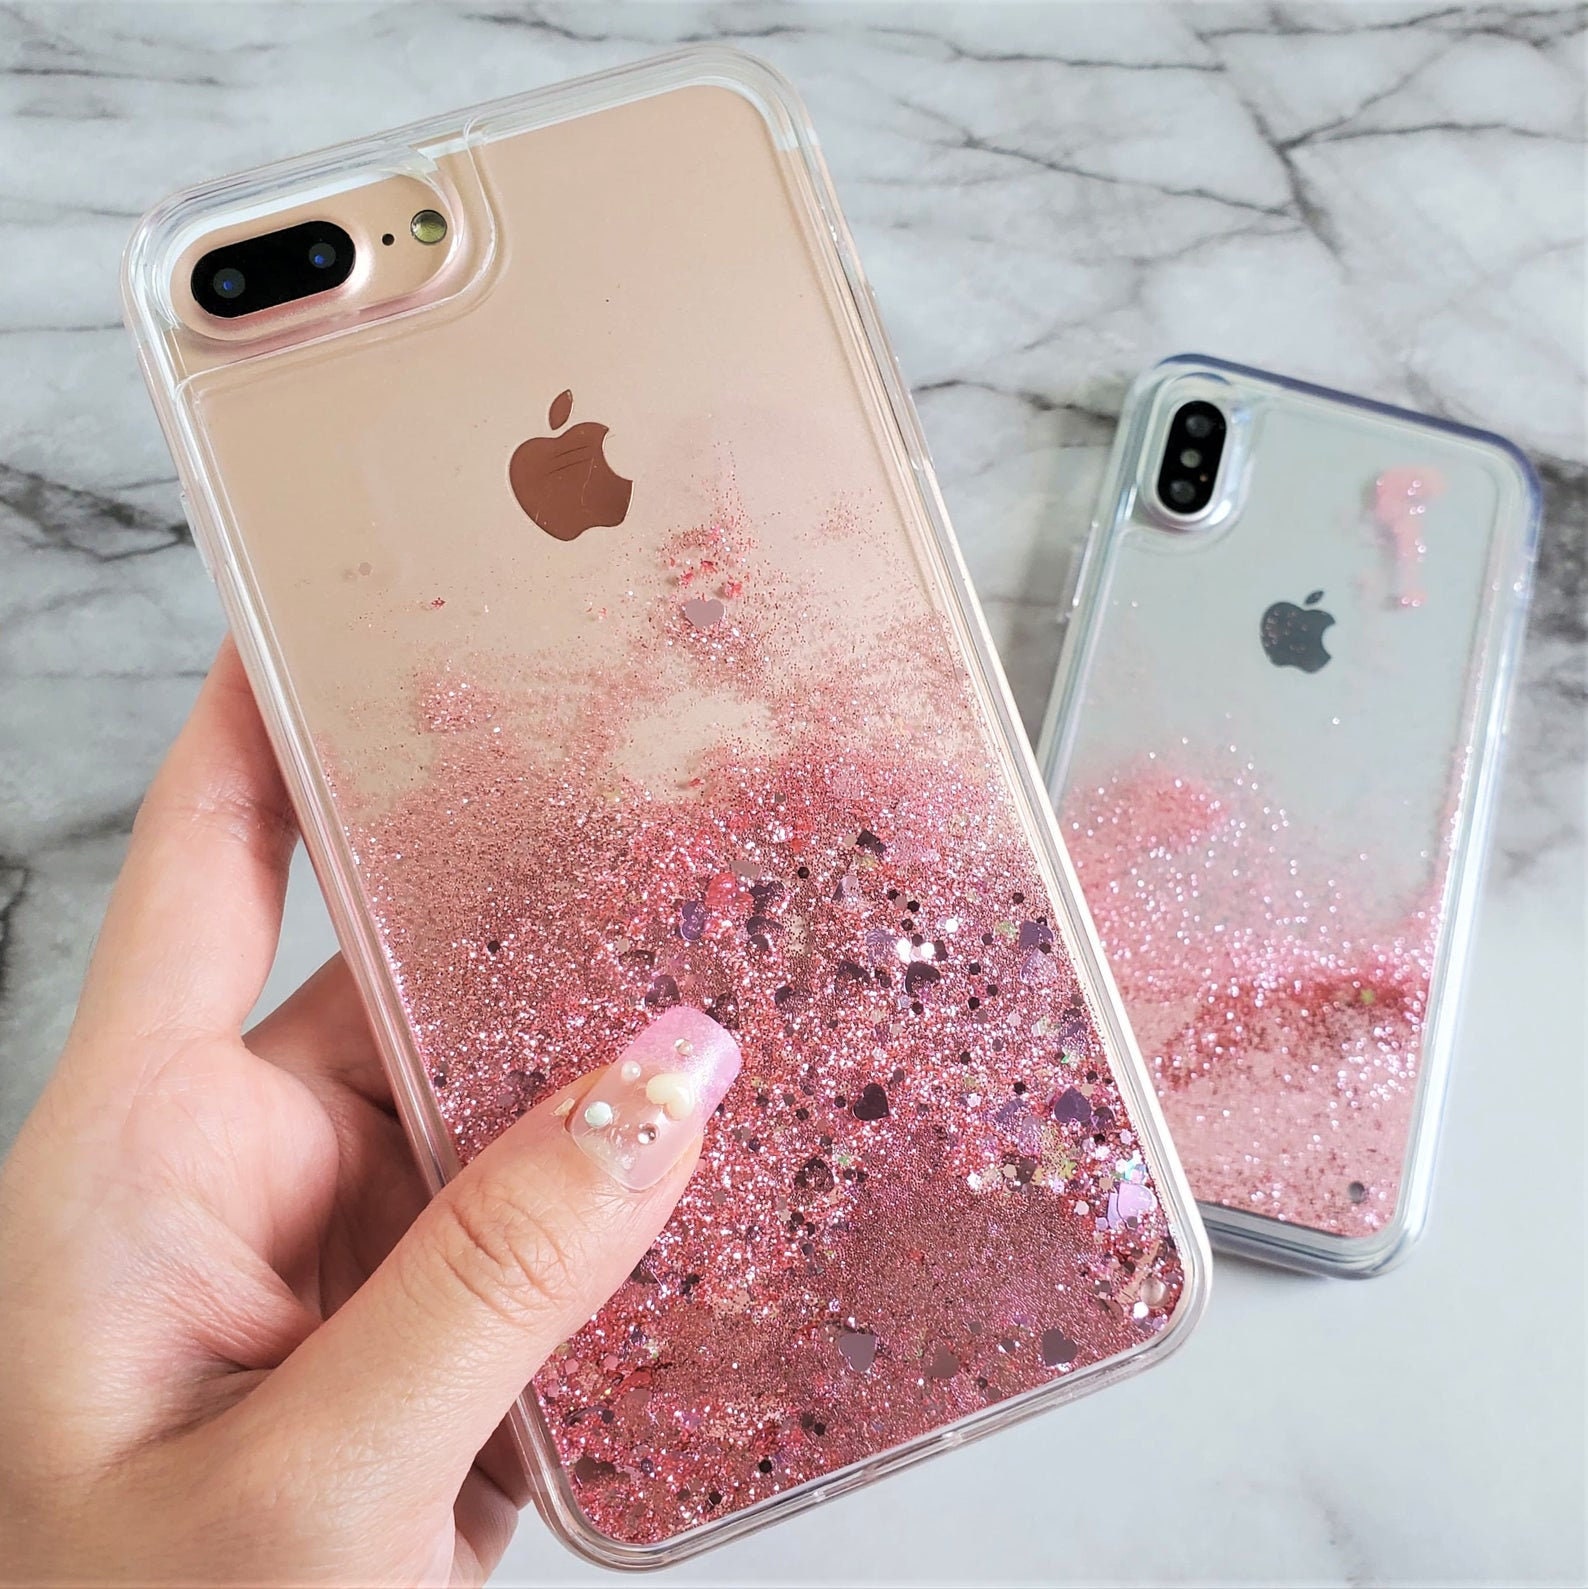 Mislukking cliënt analogie Pink Glitter Waterfall Liquid Floating Hearts Case Iphone 6s - Etsy